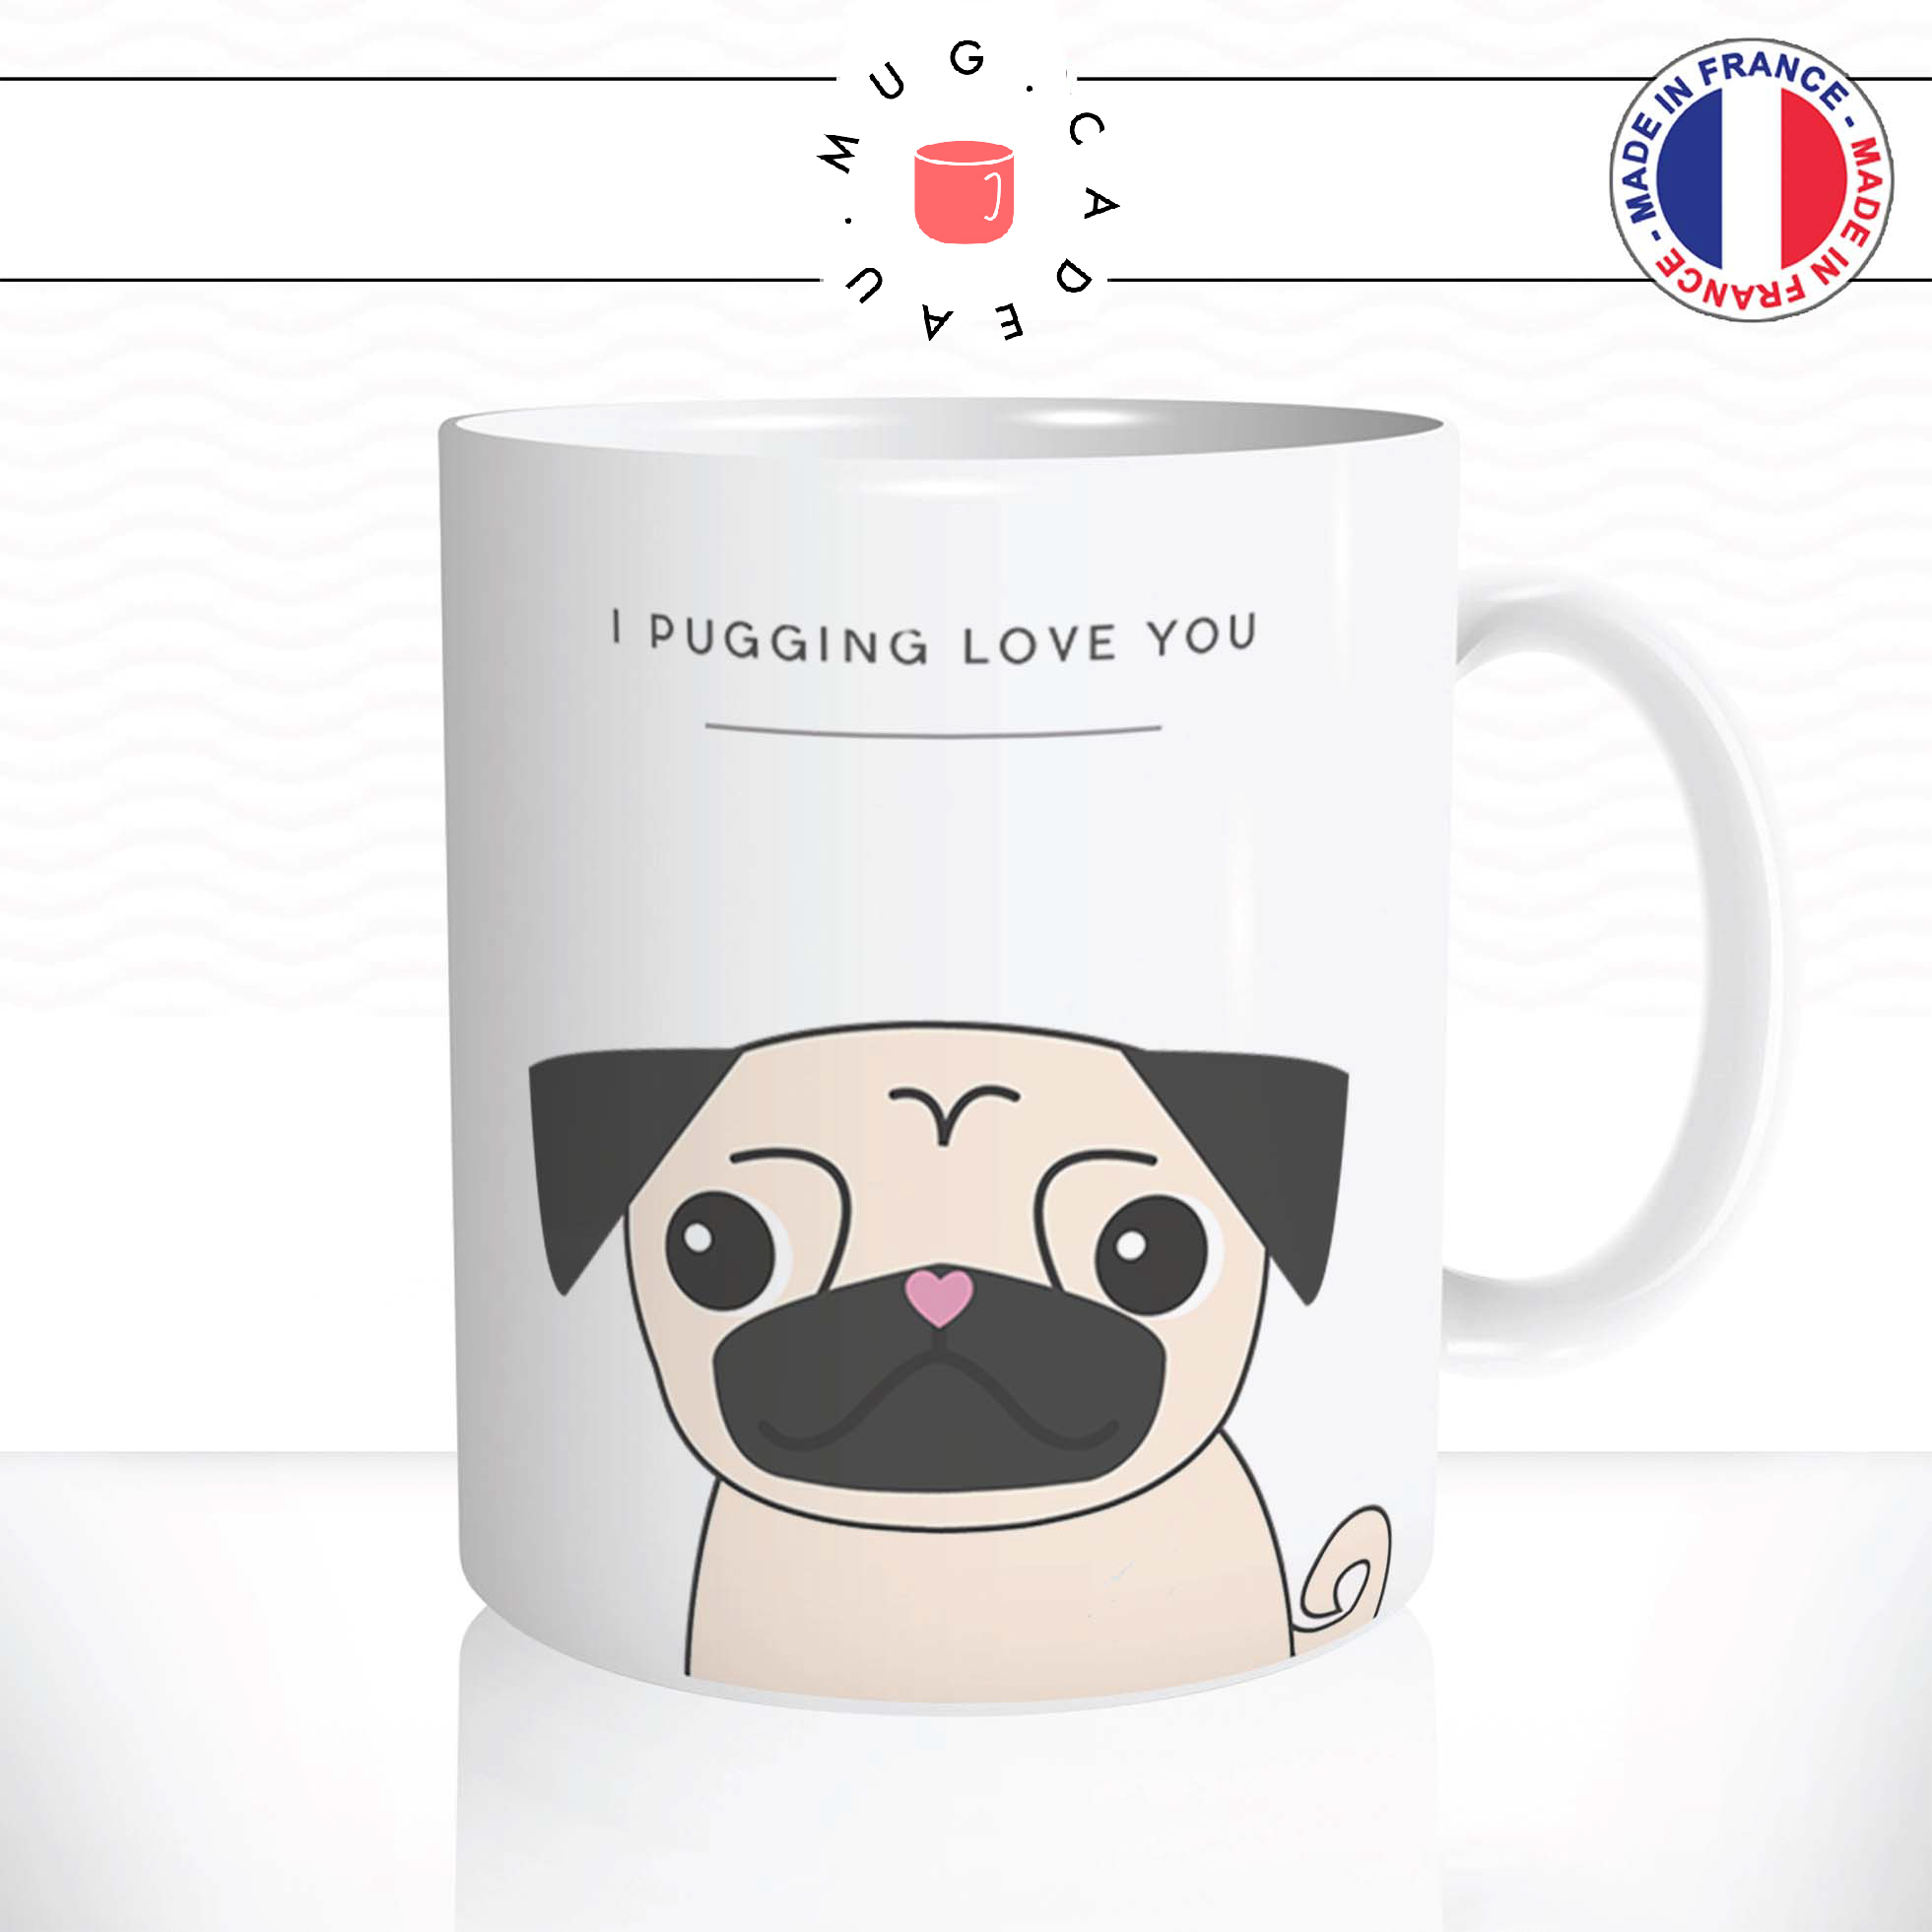 mug-tasse-ref8-chien-pug-love-you-cute-amour-cafe-the-mugs-tasses-personnalise-anse-droite